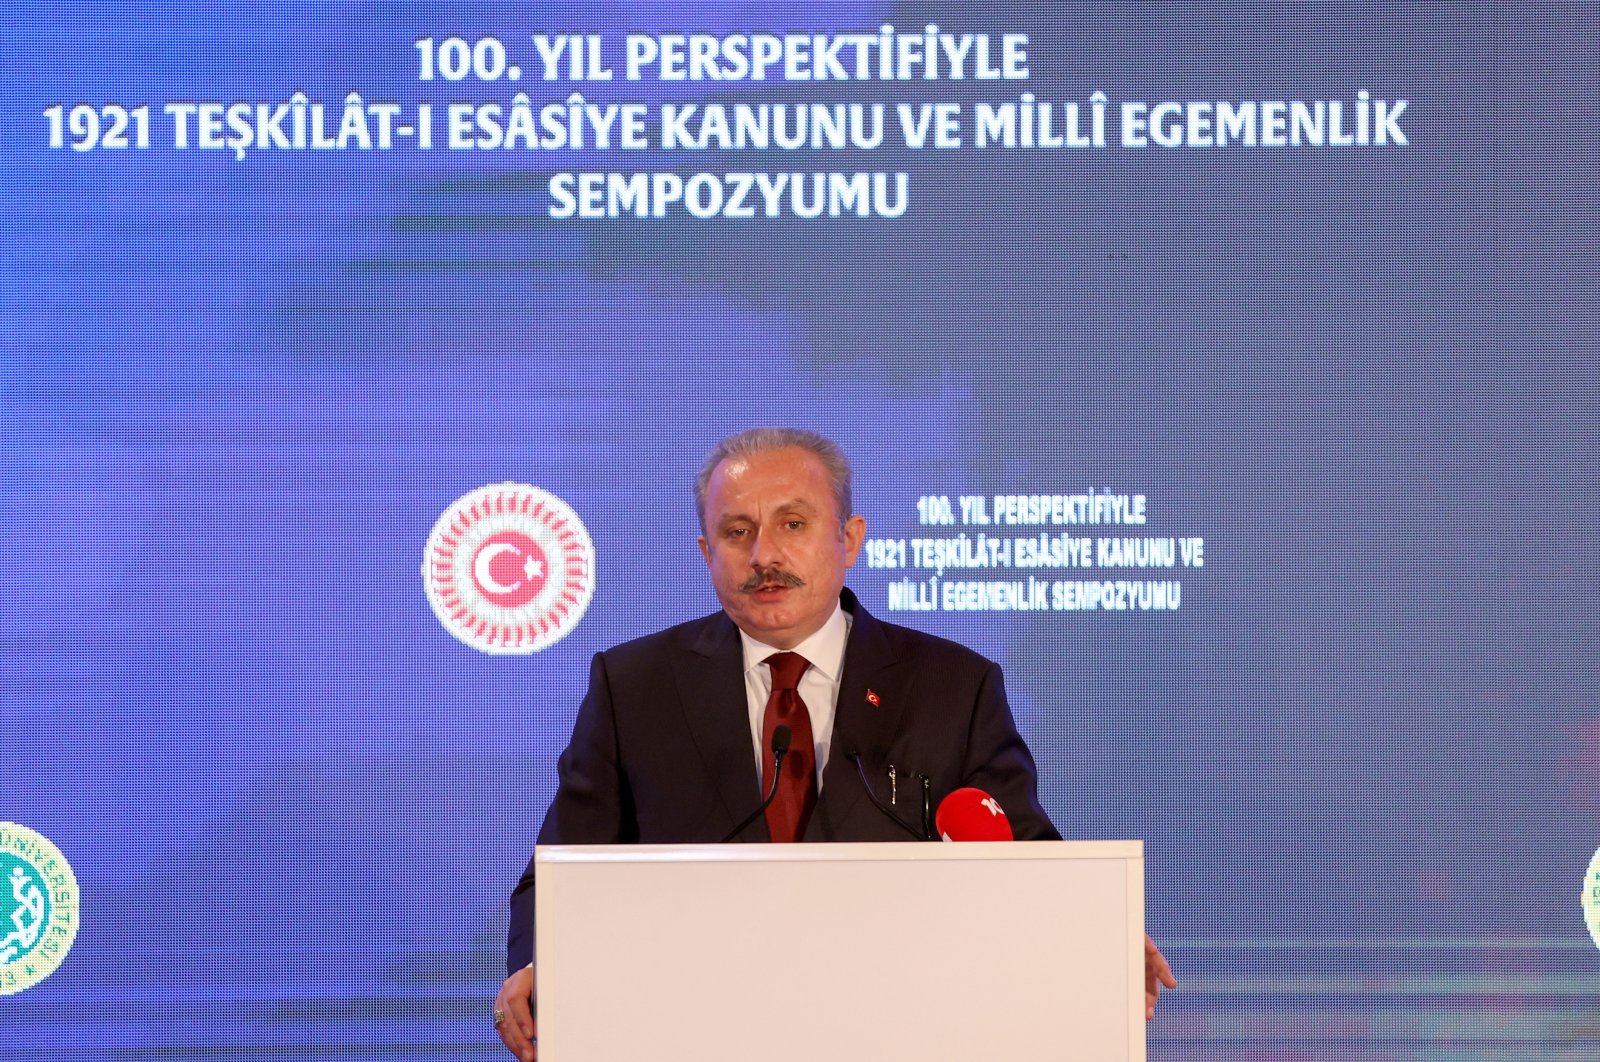 Parliament Speaker Mustafa Şentop speaks at an event in Istanbul, Turkey, April 2, 2021. (AA Photo)